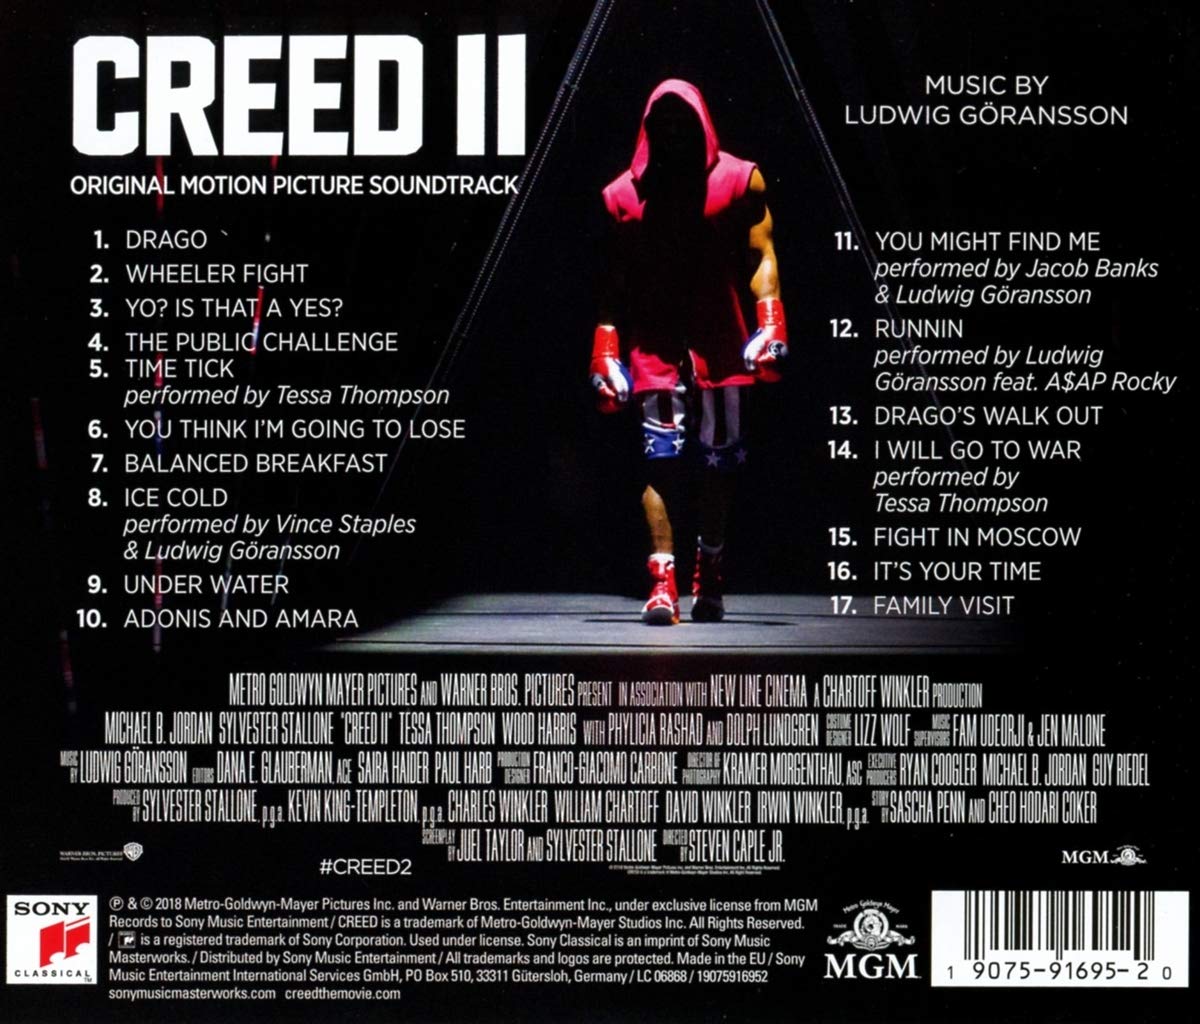 Creed II | Ludwig Goransson image1